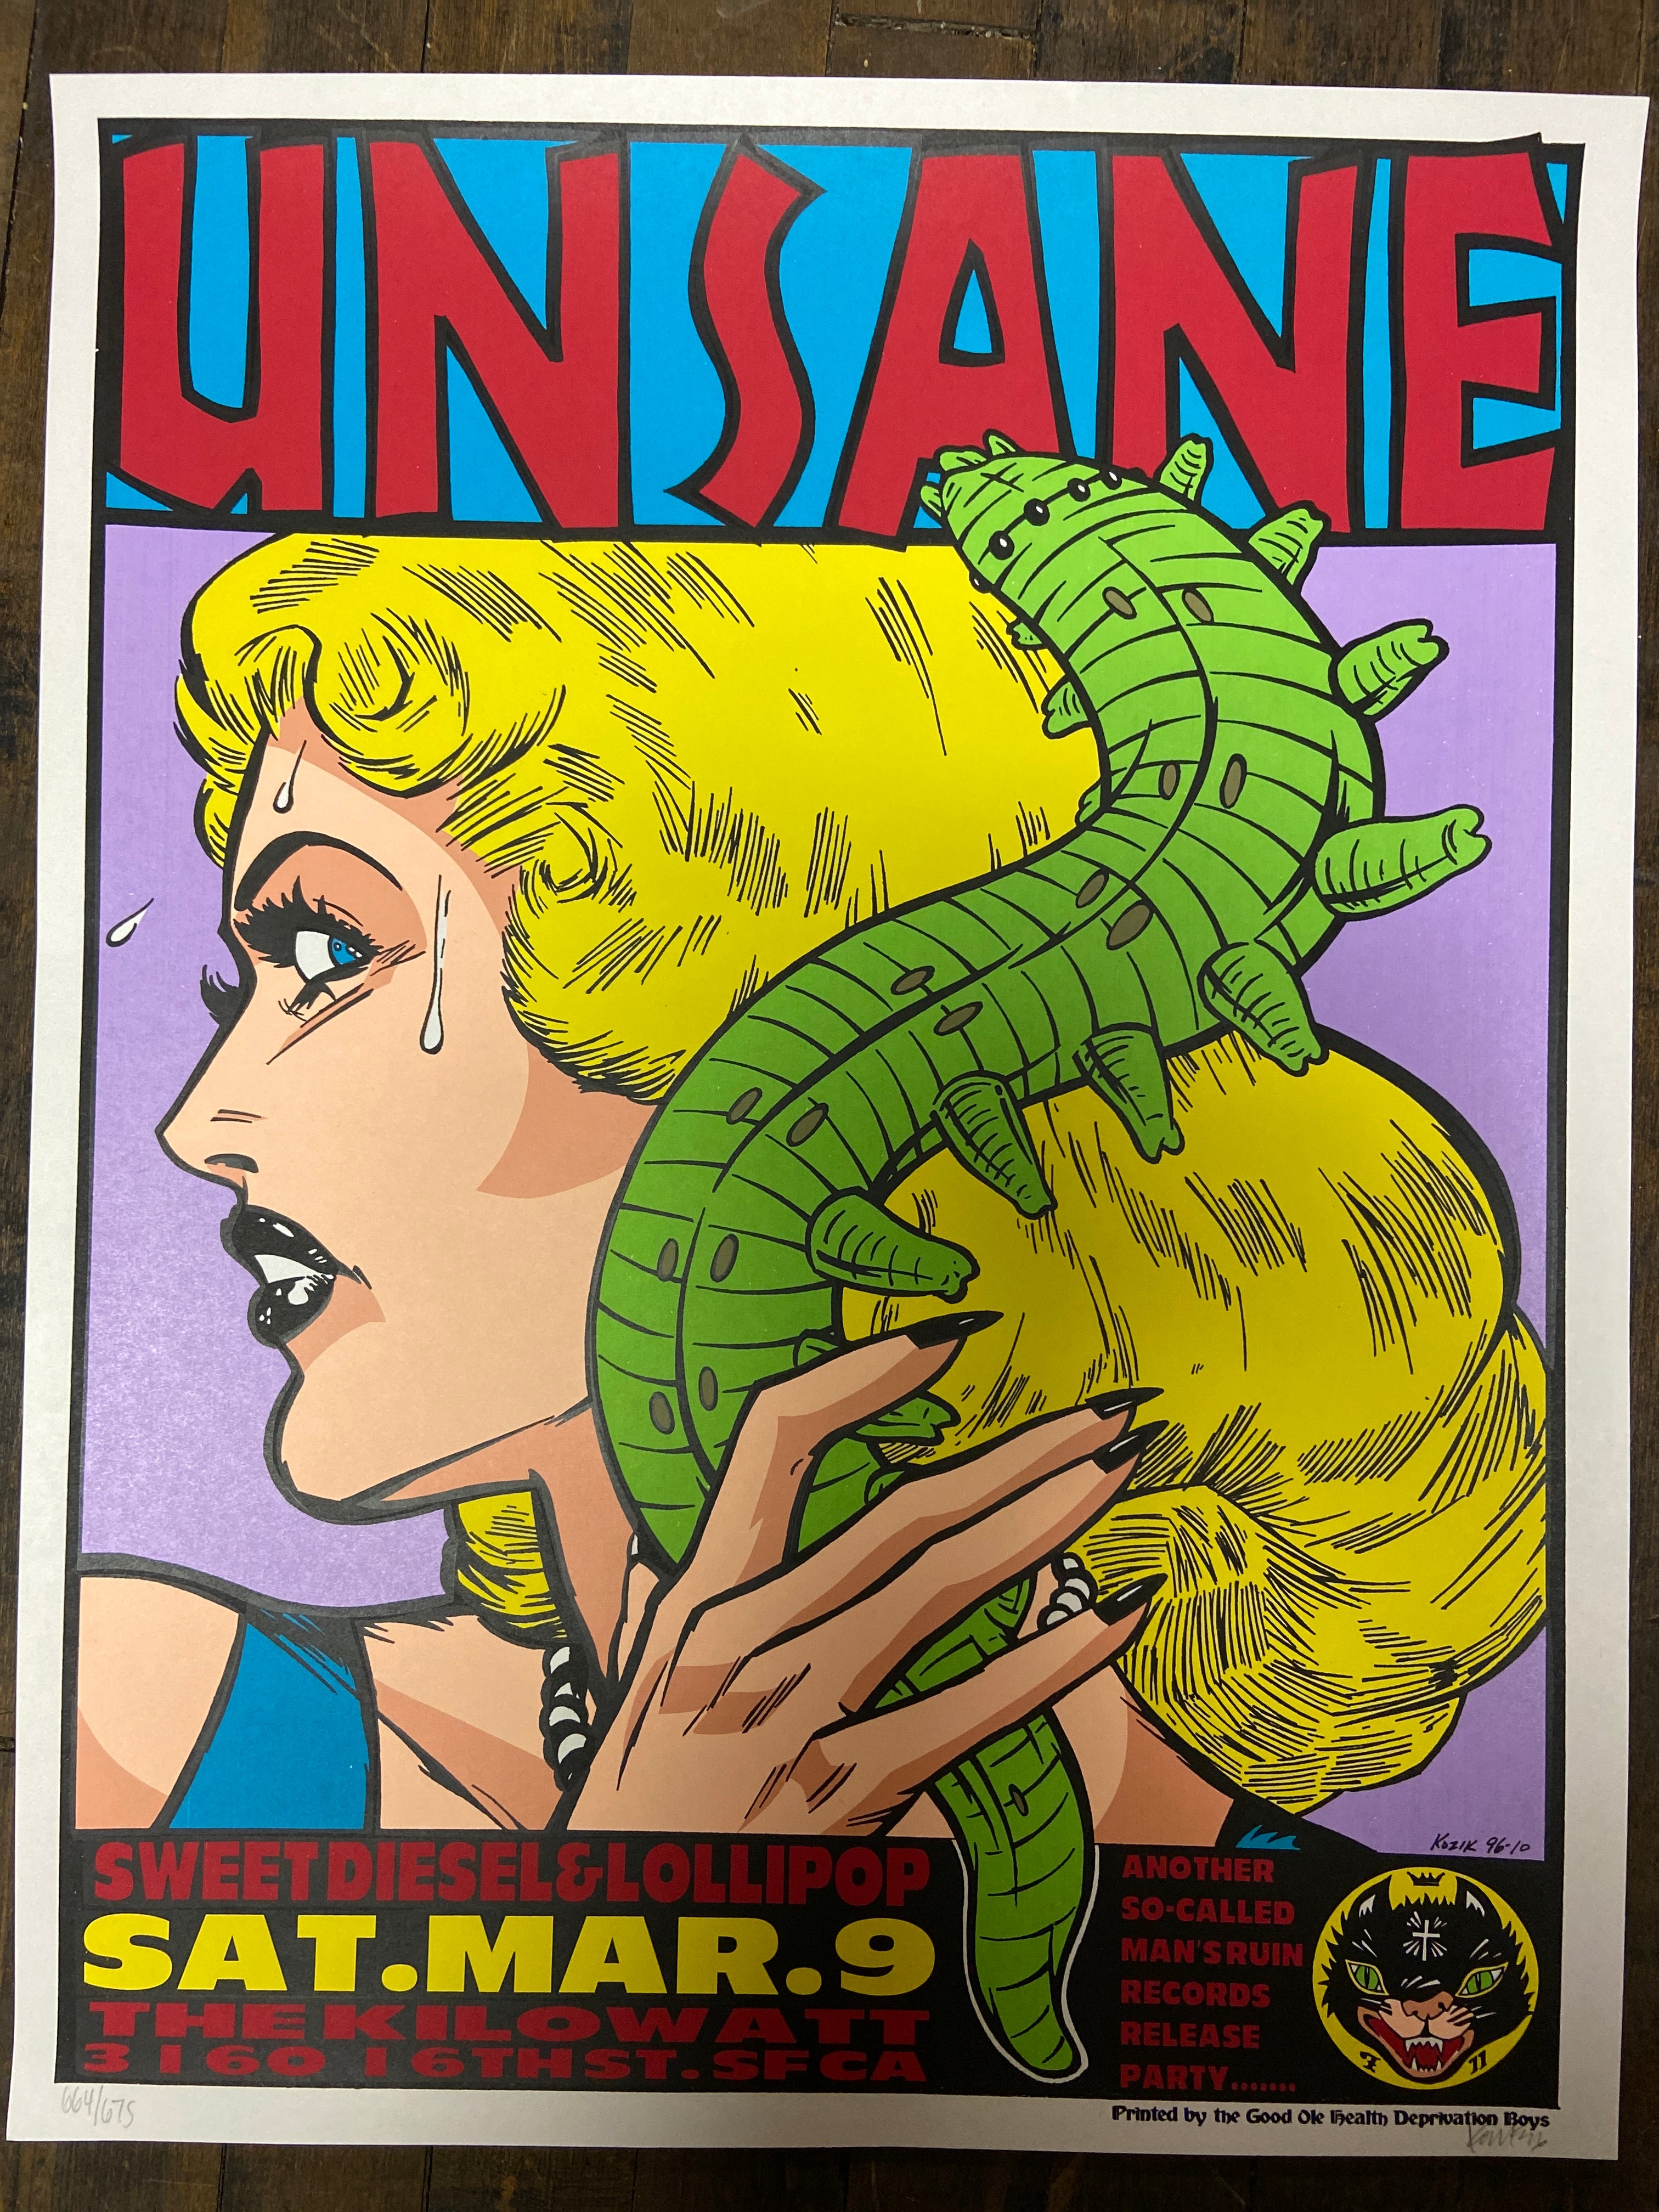 Frank Kozik - 1996 - Unsane Concert Poster – Nevermind Gallery